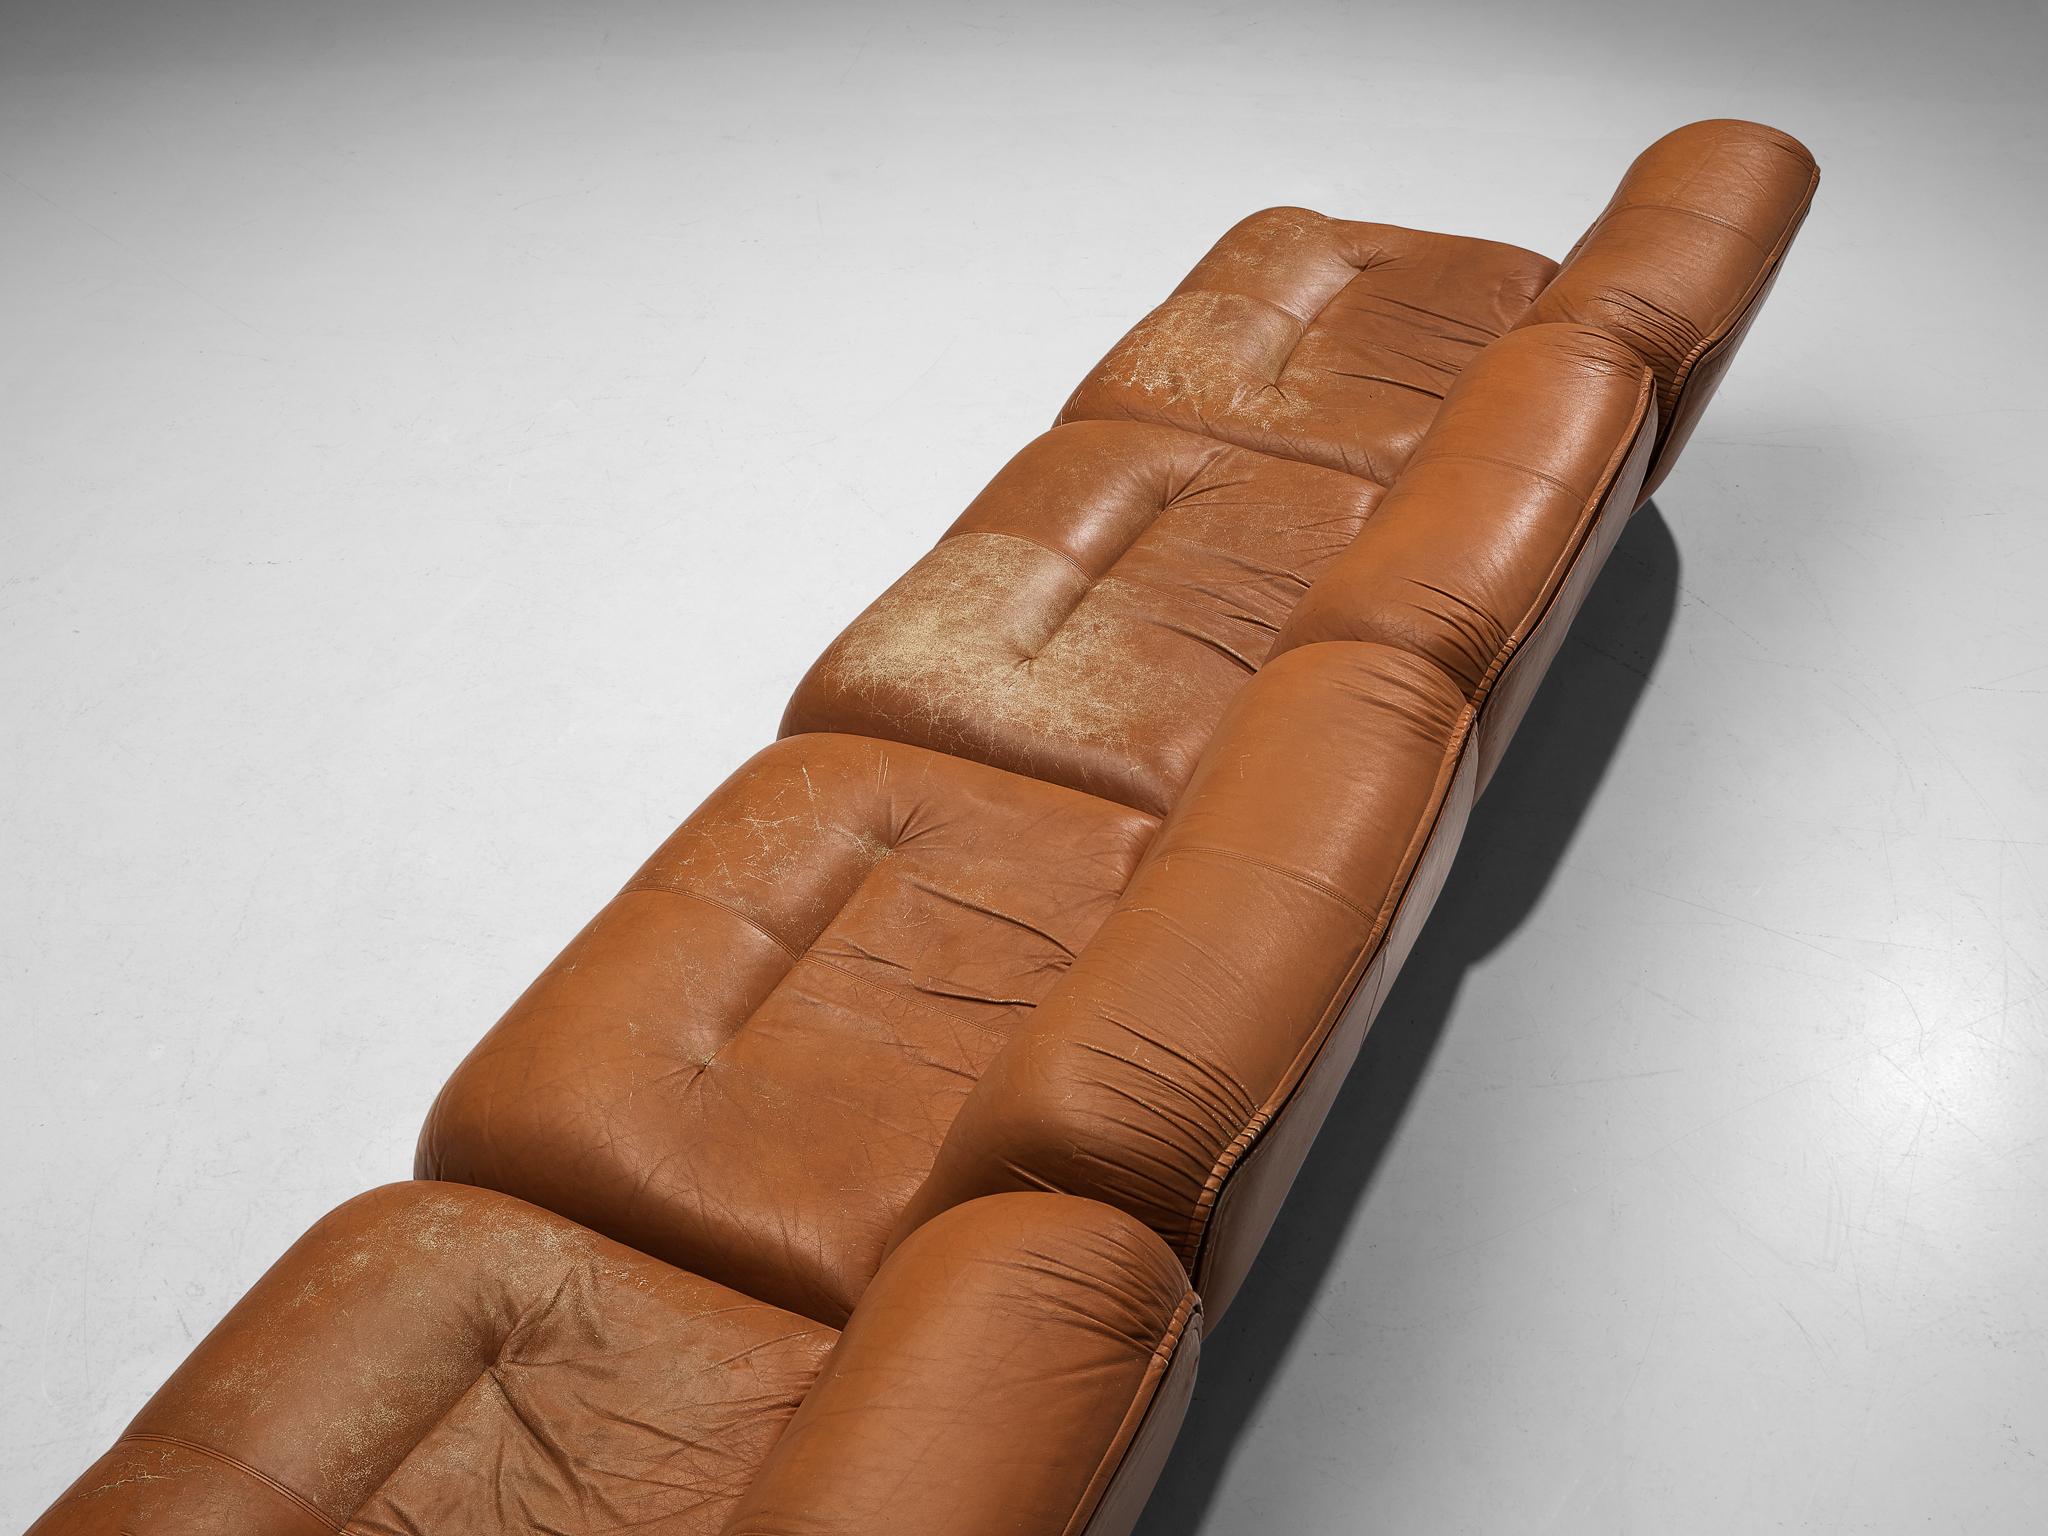 Steel Giuseppe Munari Sectional Sofa in Cognac Leather